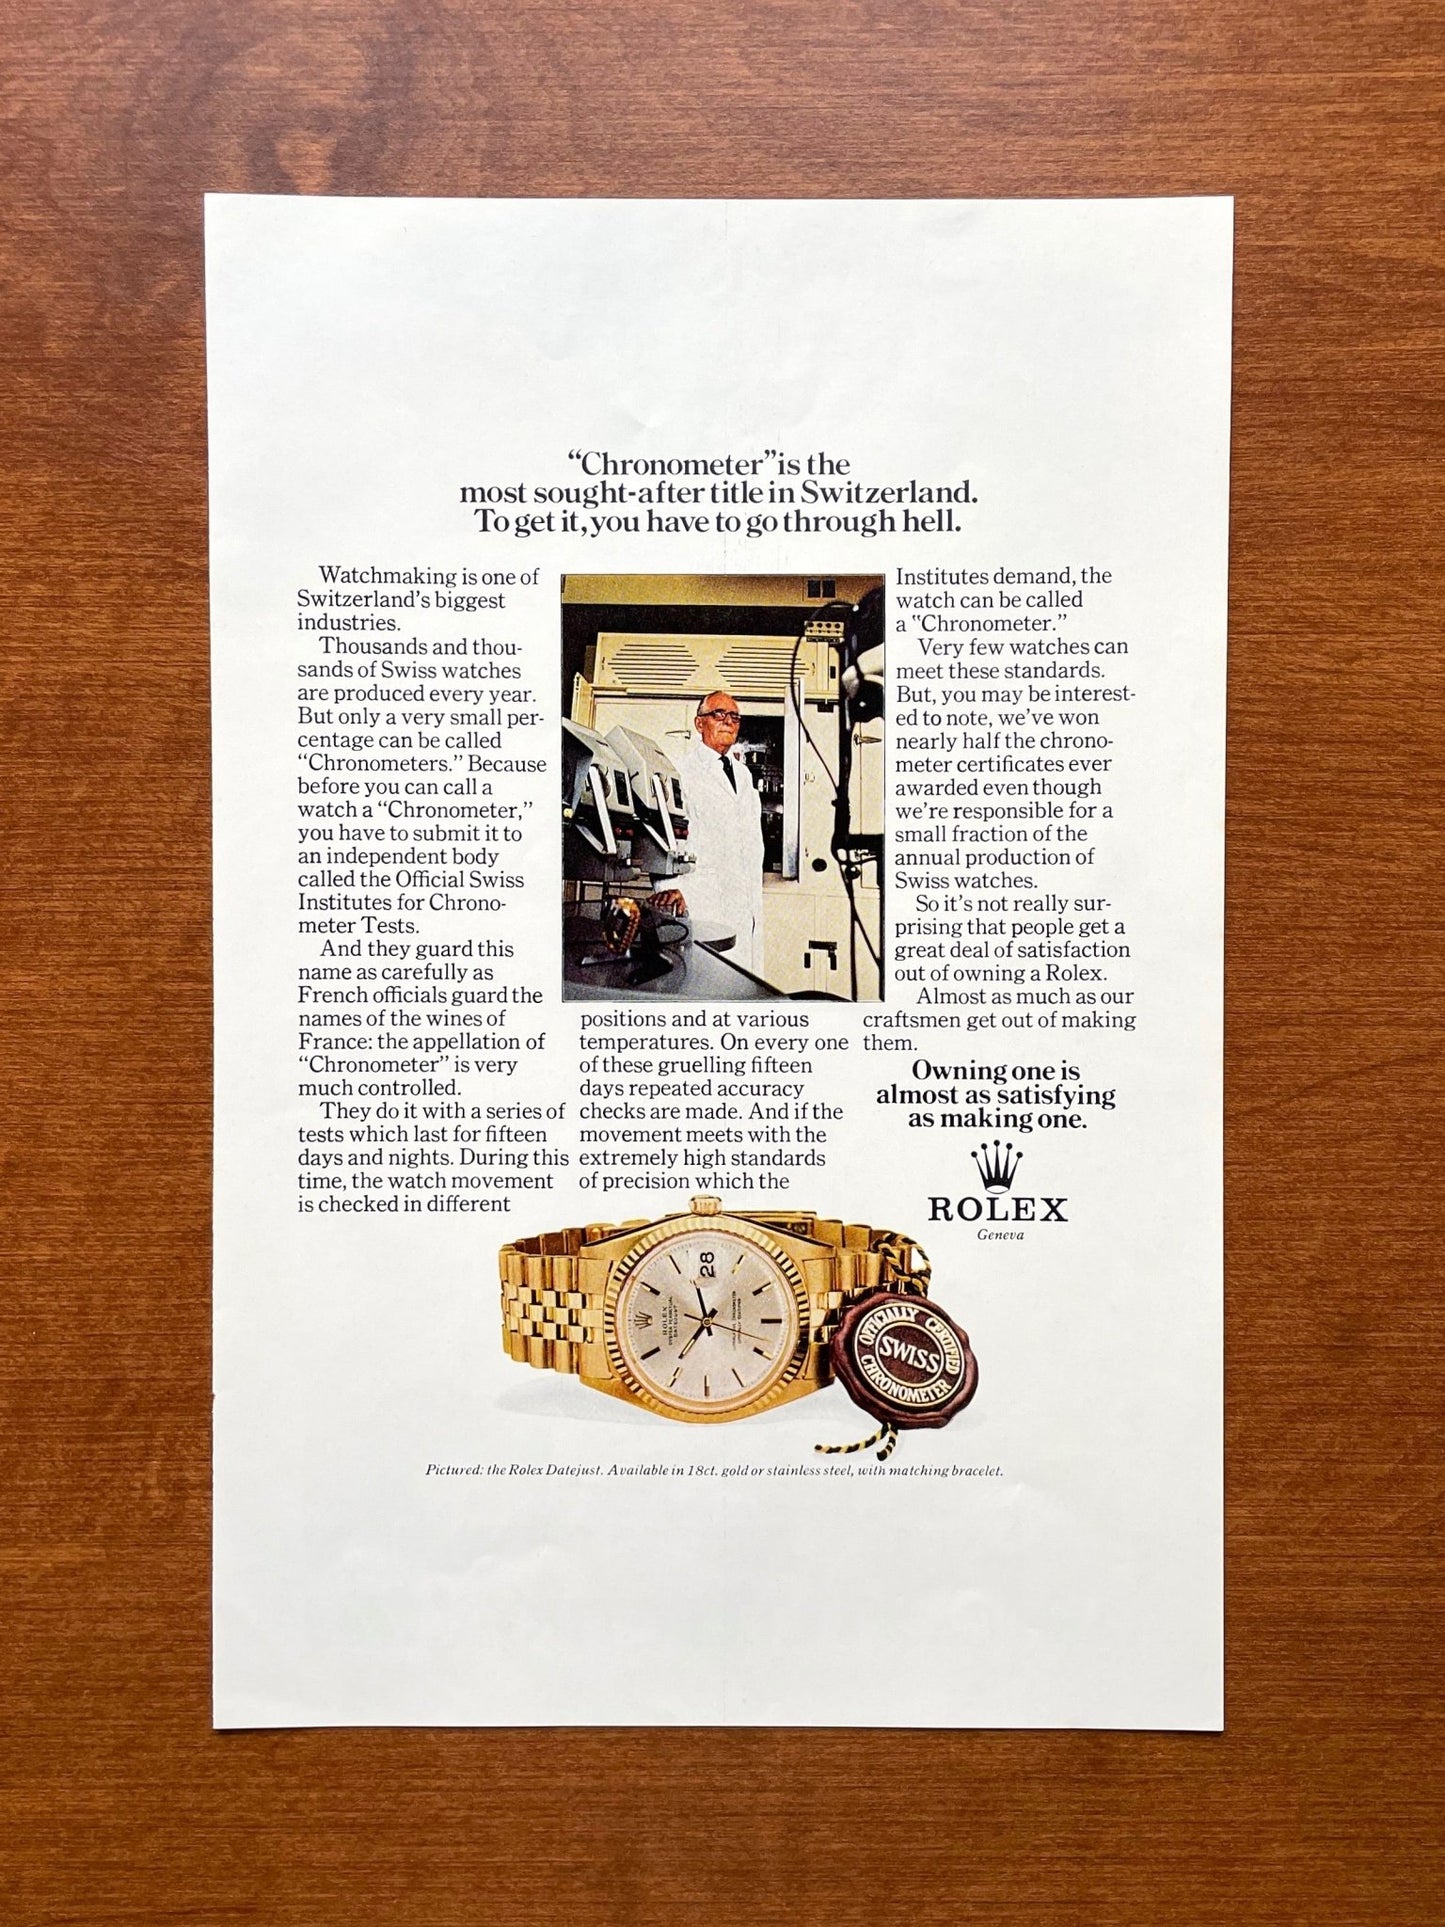 1971 Rolex Datejust Ref. 1601 in 18ct. gold "Chronometer" Advertisement